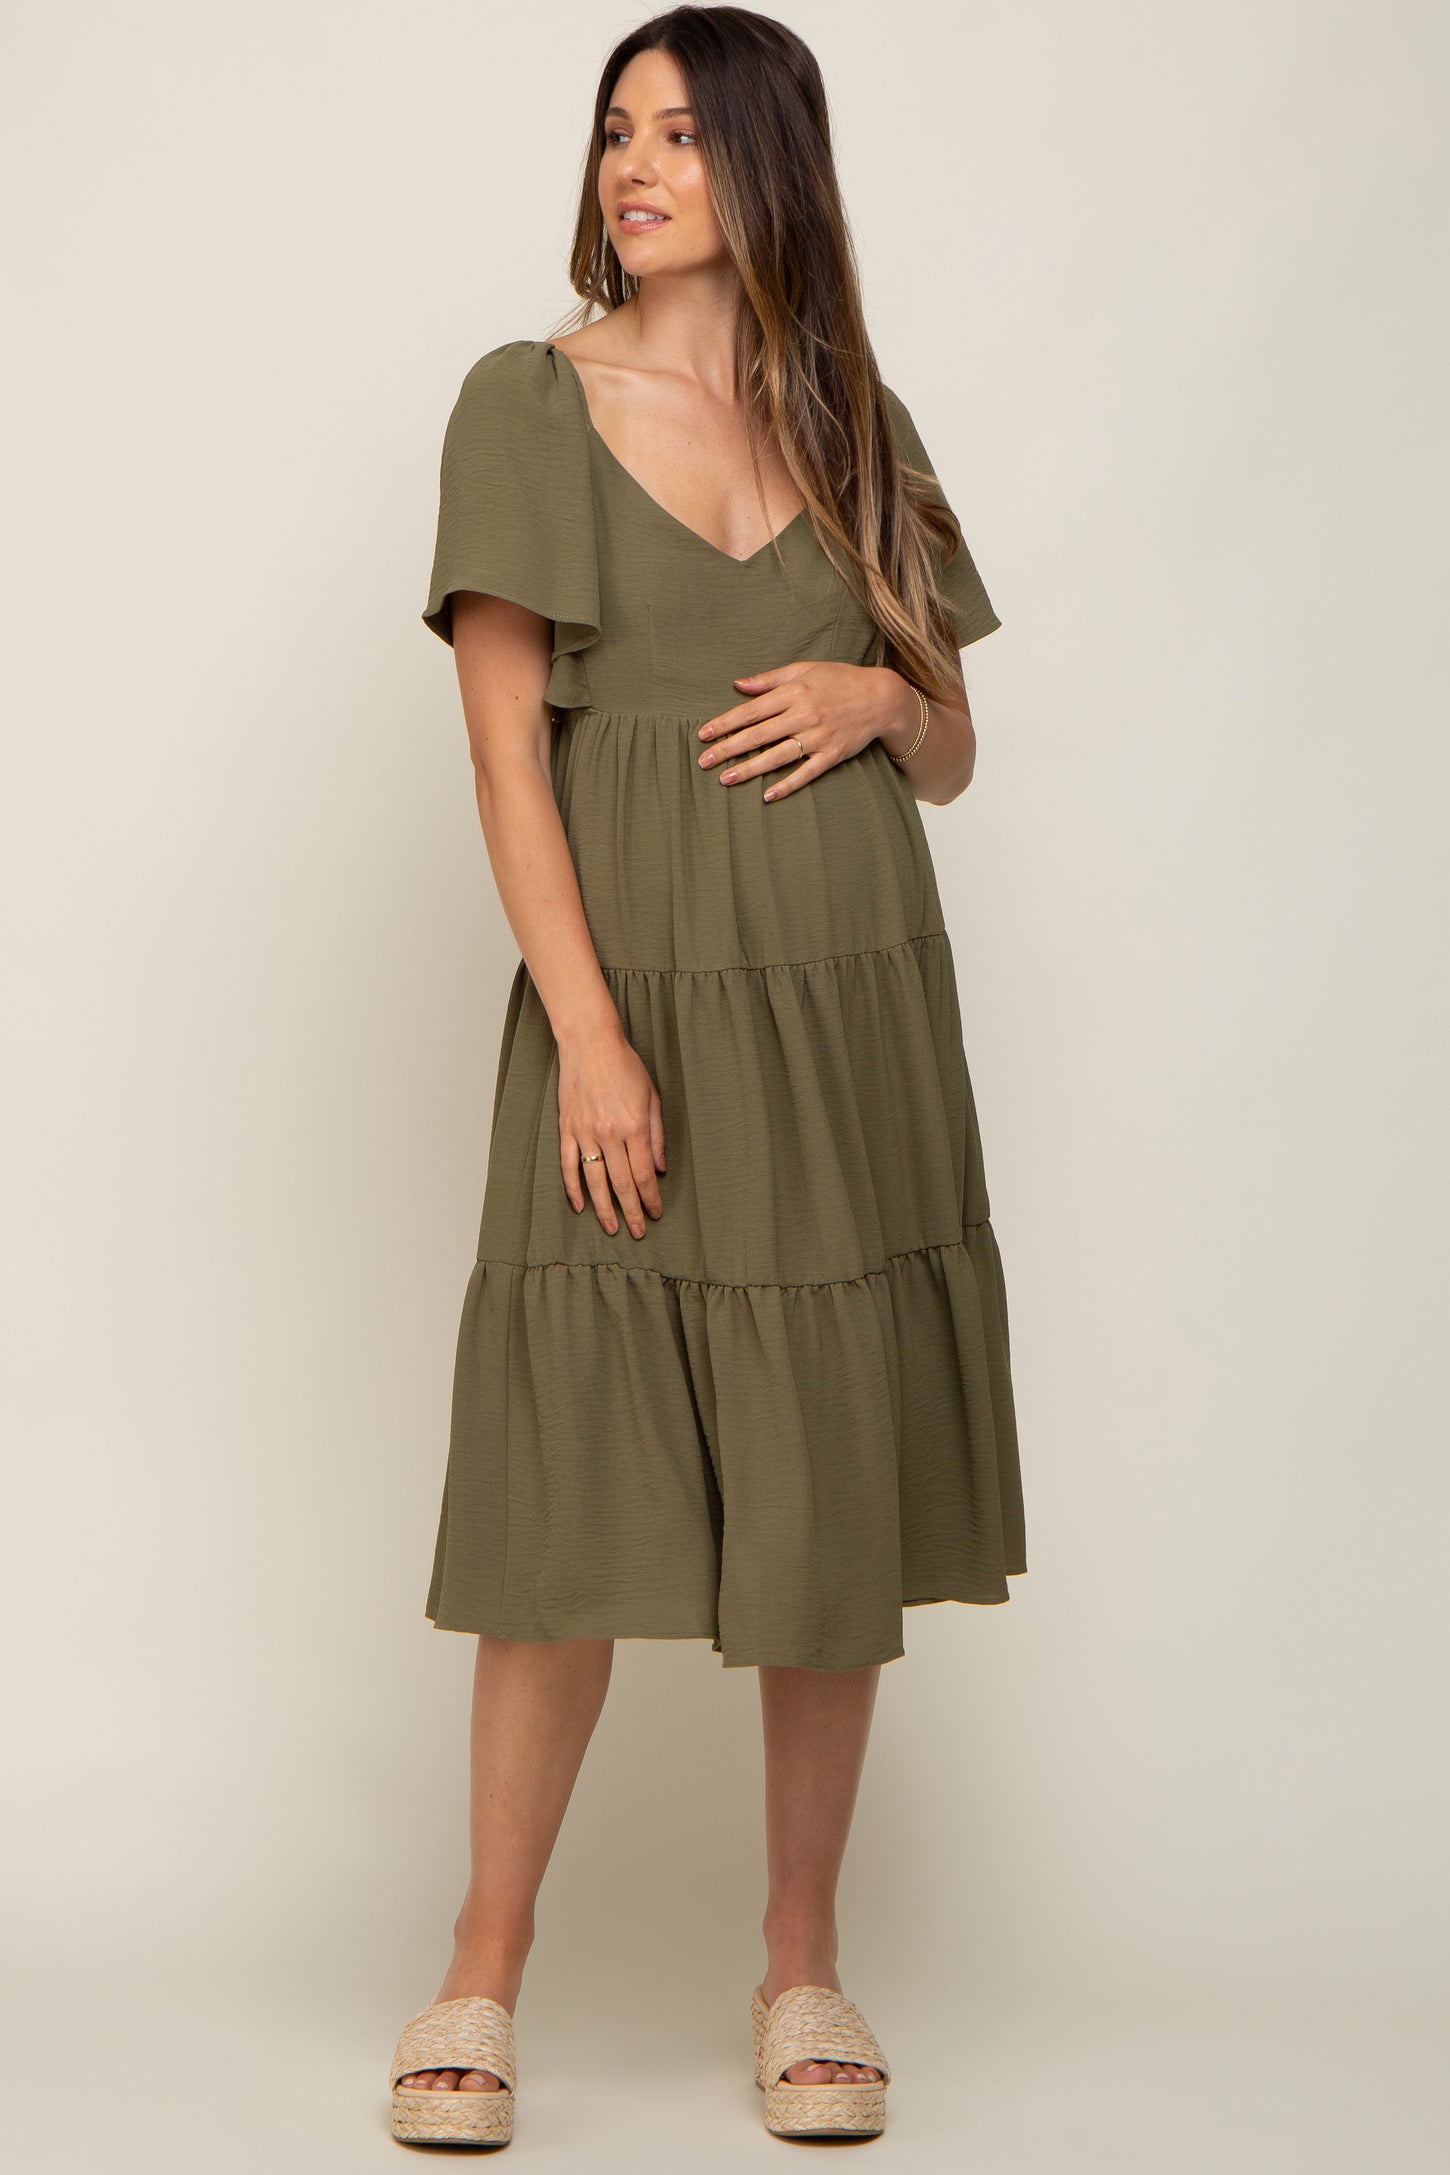 Olive Tiered Criss Cross Back Maternity Midi Dress